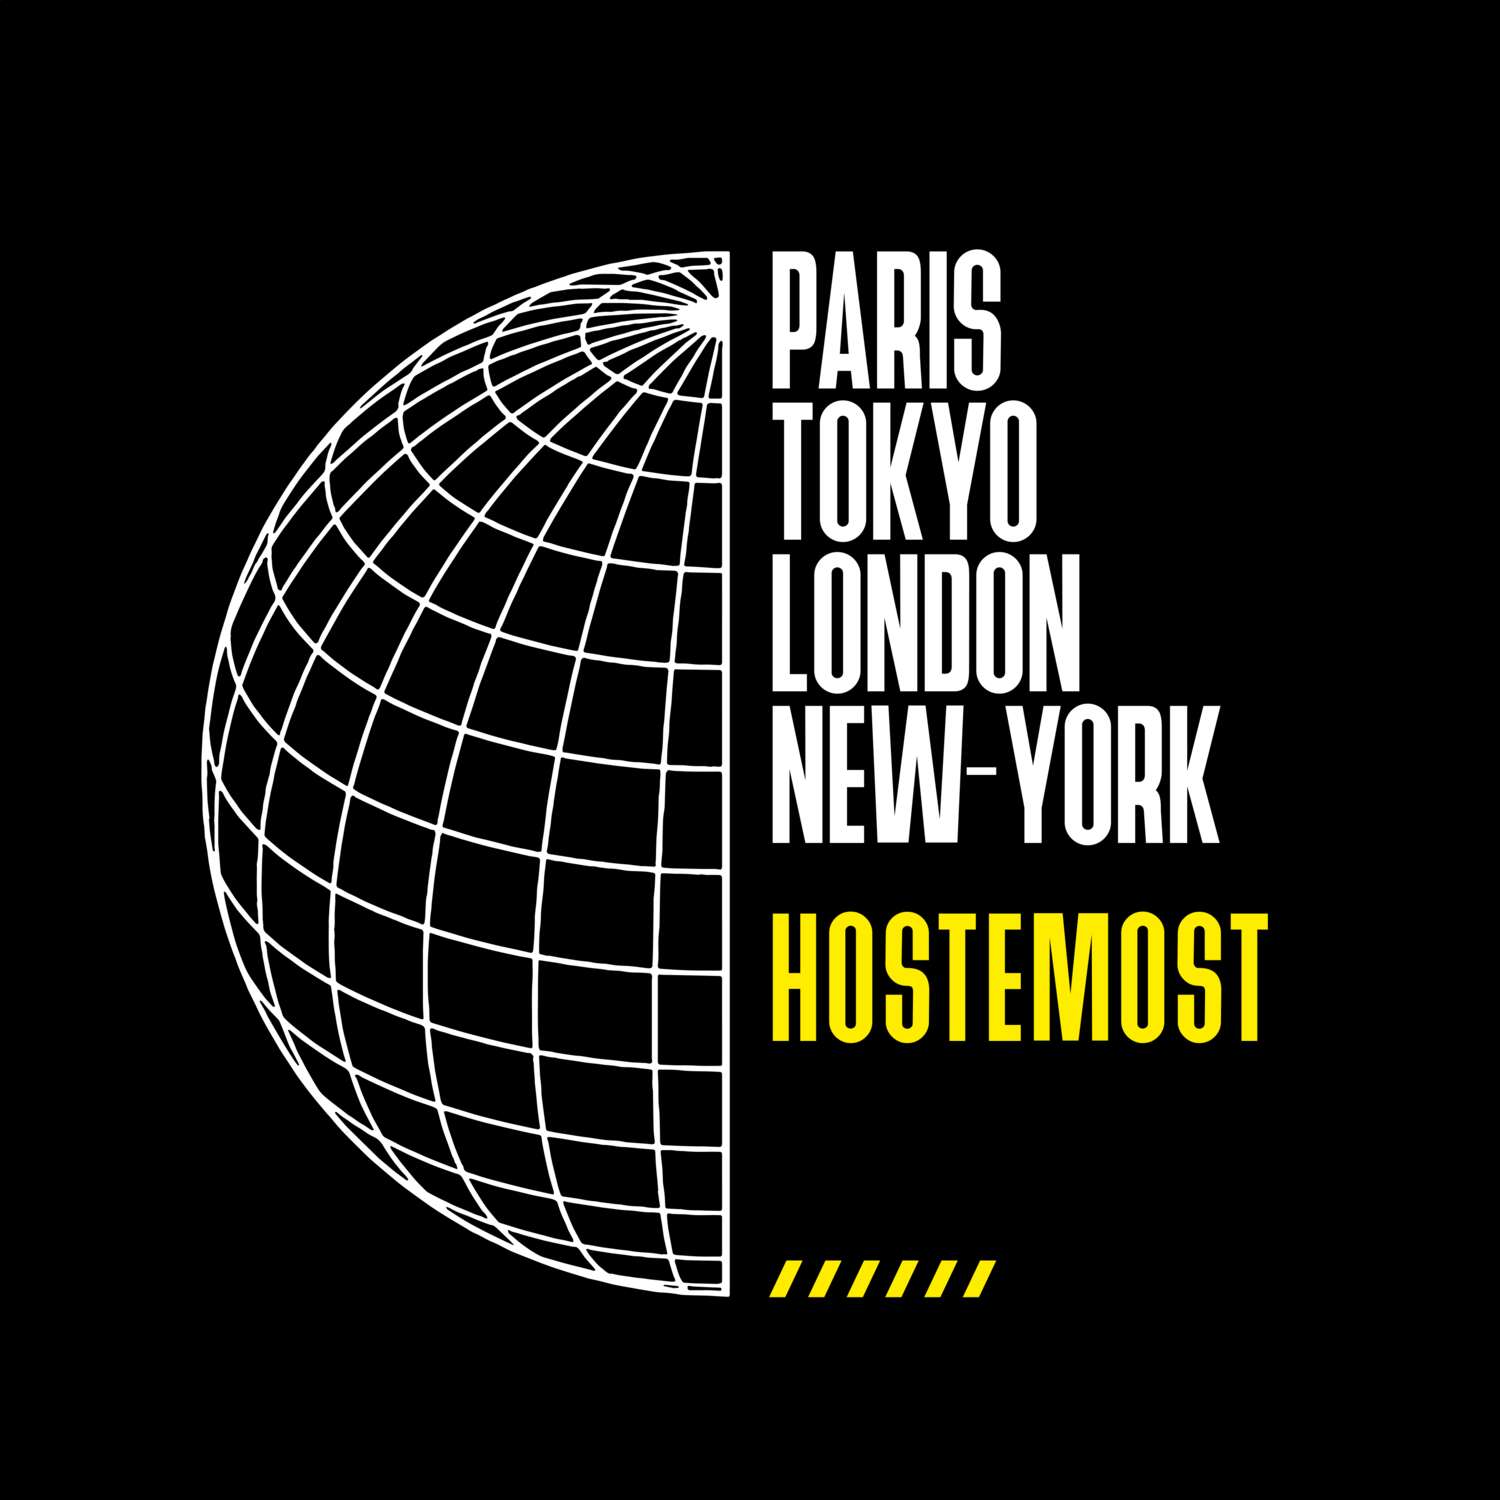 Hostemost T-Shirt »Paris Tokyo London«